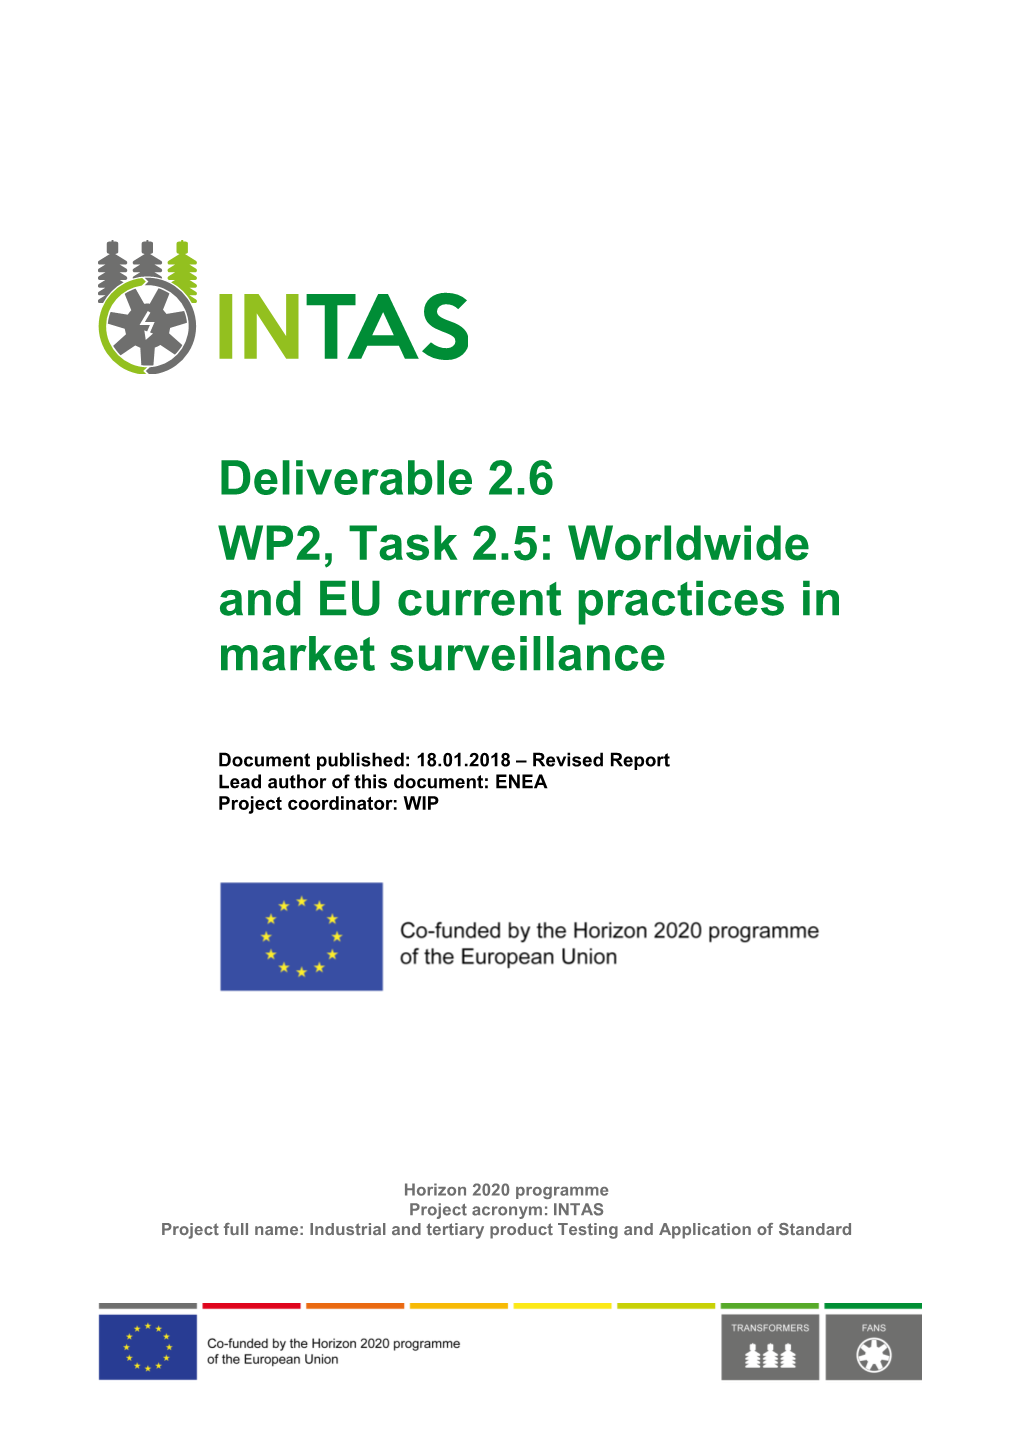 Worldwide and EU Current Practices in Market Surveillance